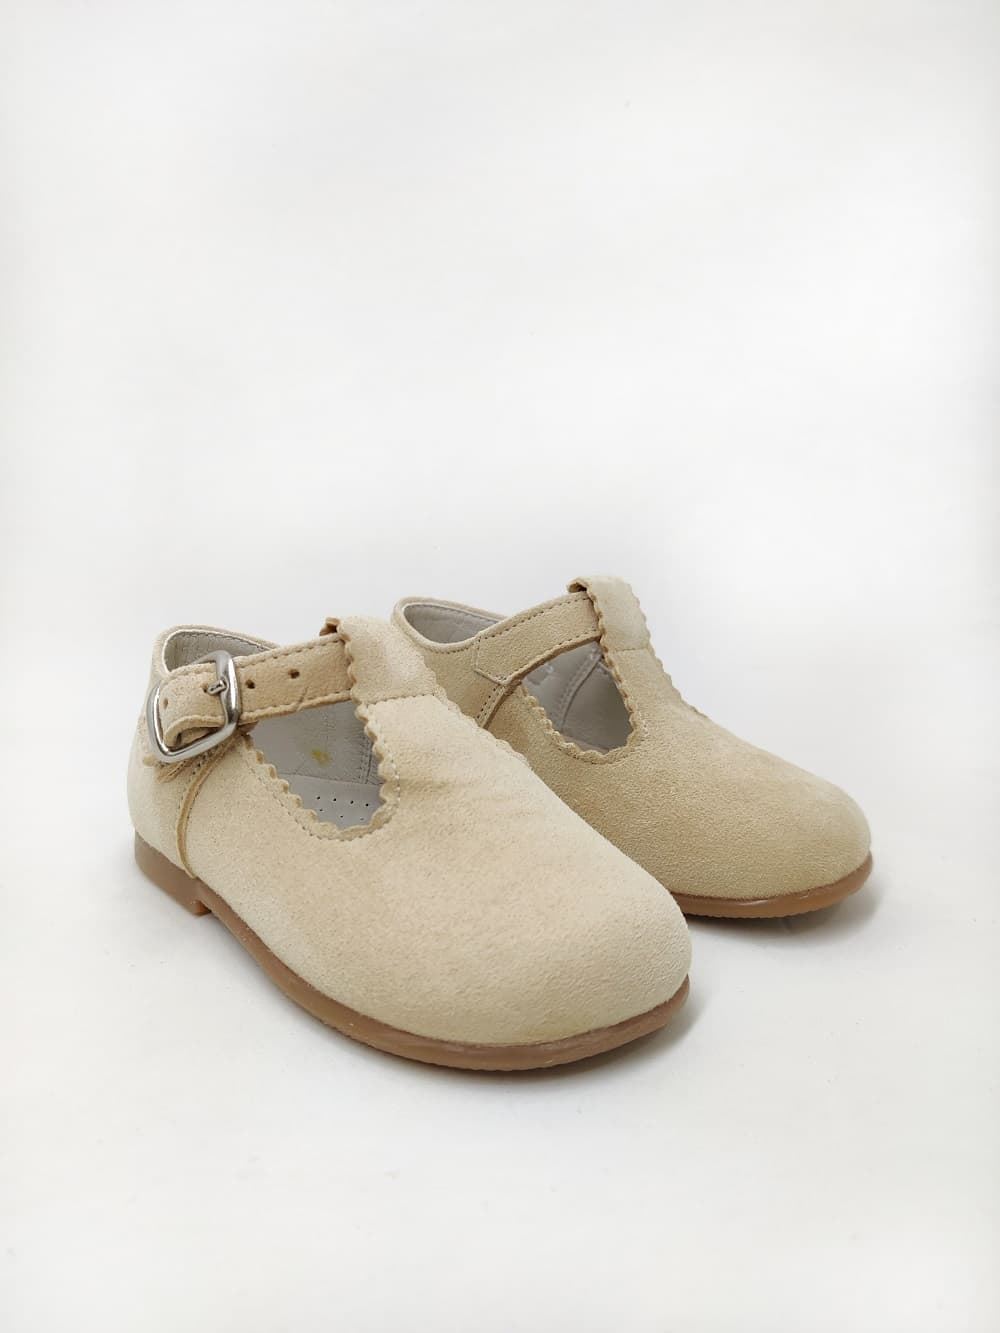 Pirufin (Piruflex) zapato Pepito para bebé Ante Camel - Imagen 1